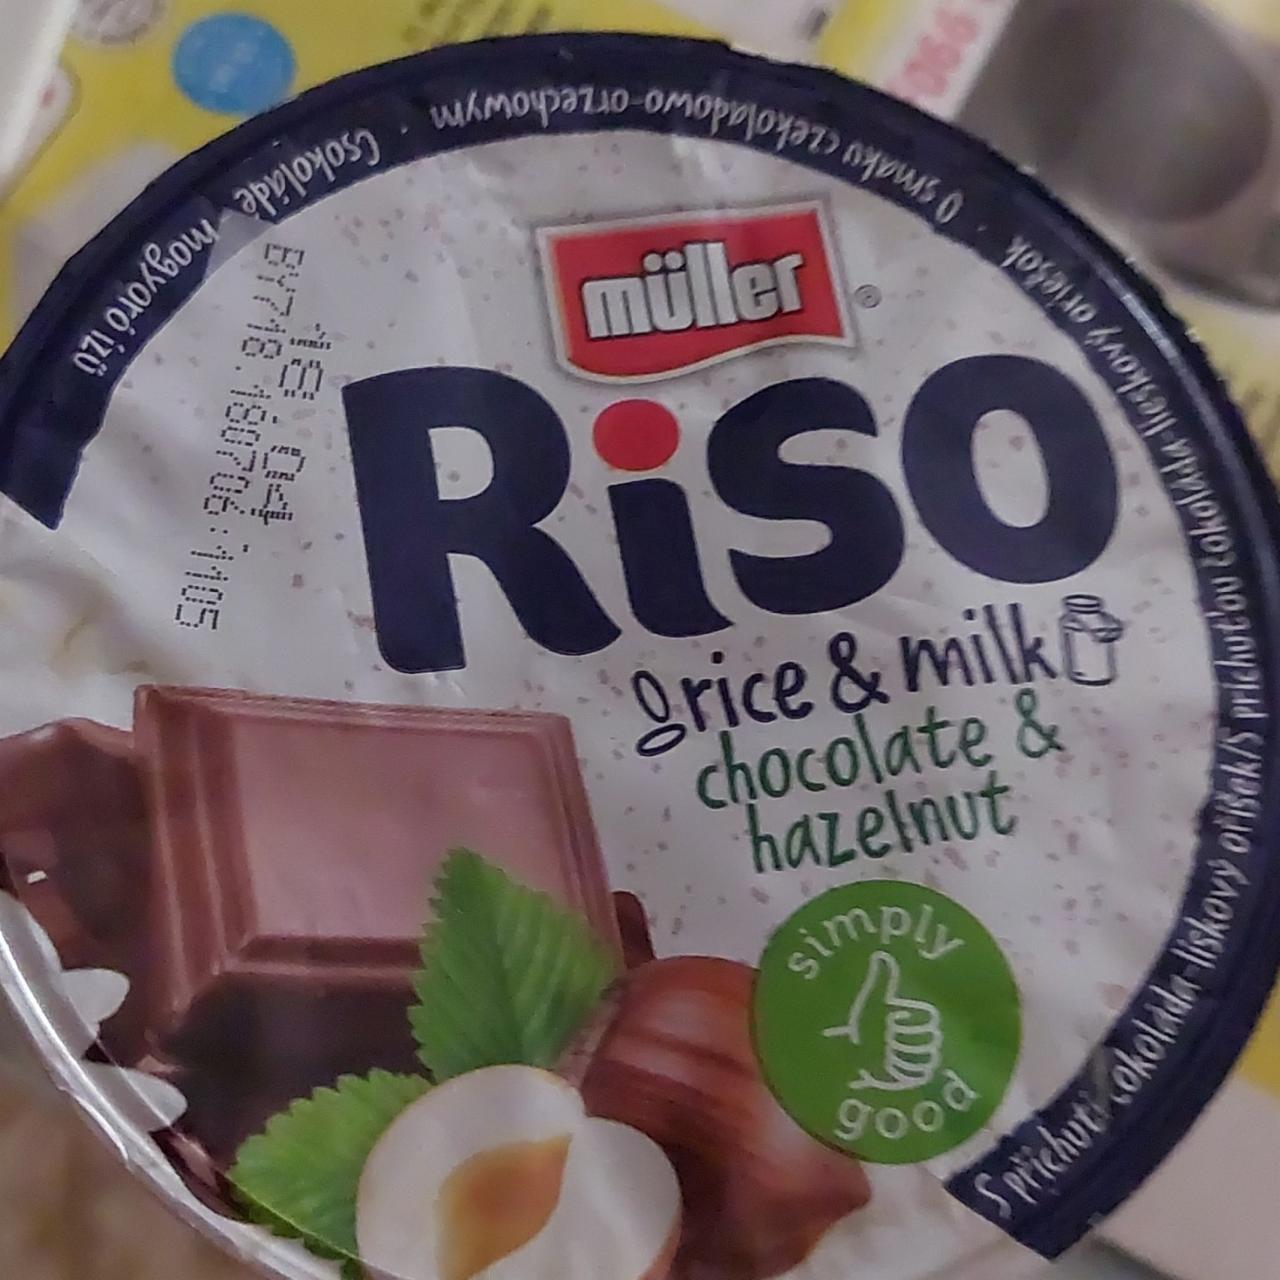 Fotografie - Riso rice & milk chocolate & hazelnut Müller